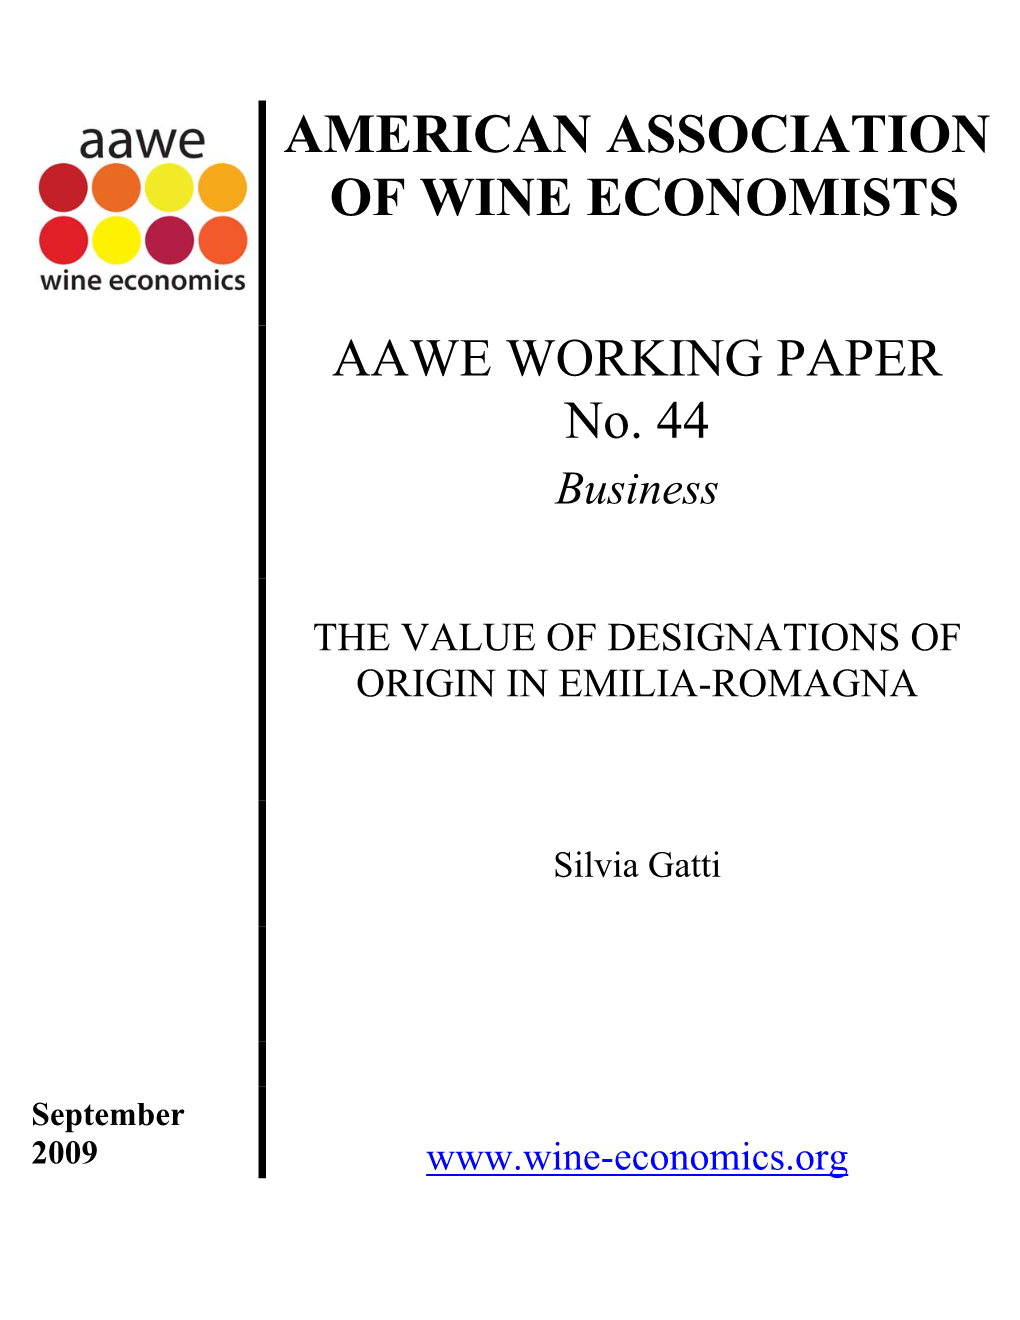 American Association of Wine Economists